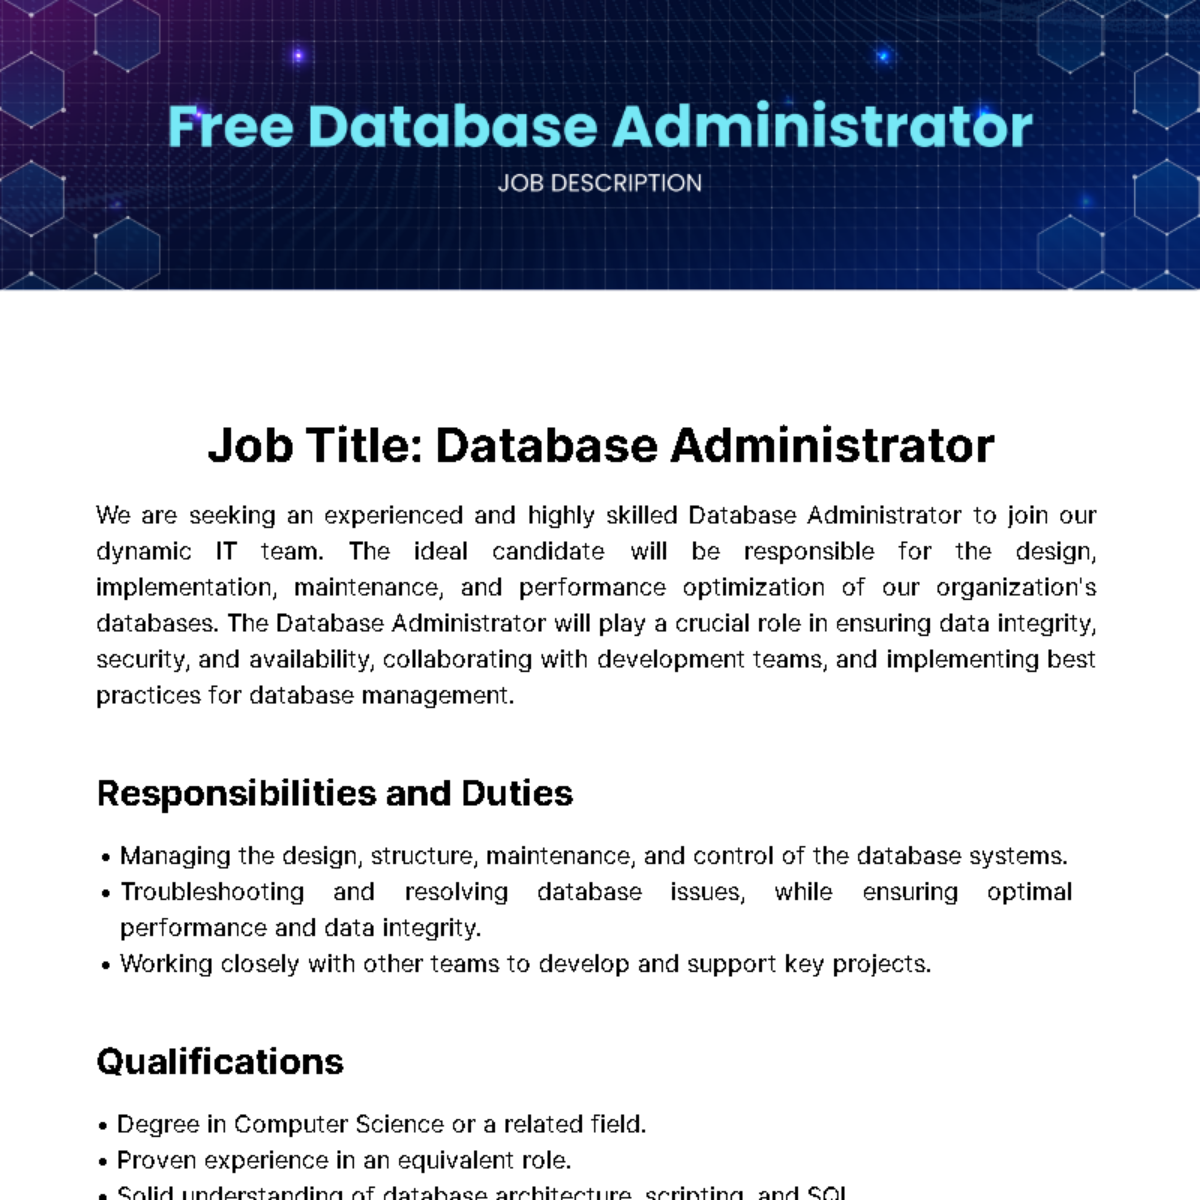 Free Database Administrator Job Description